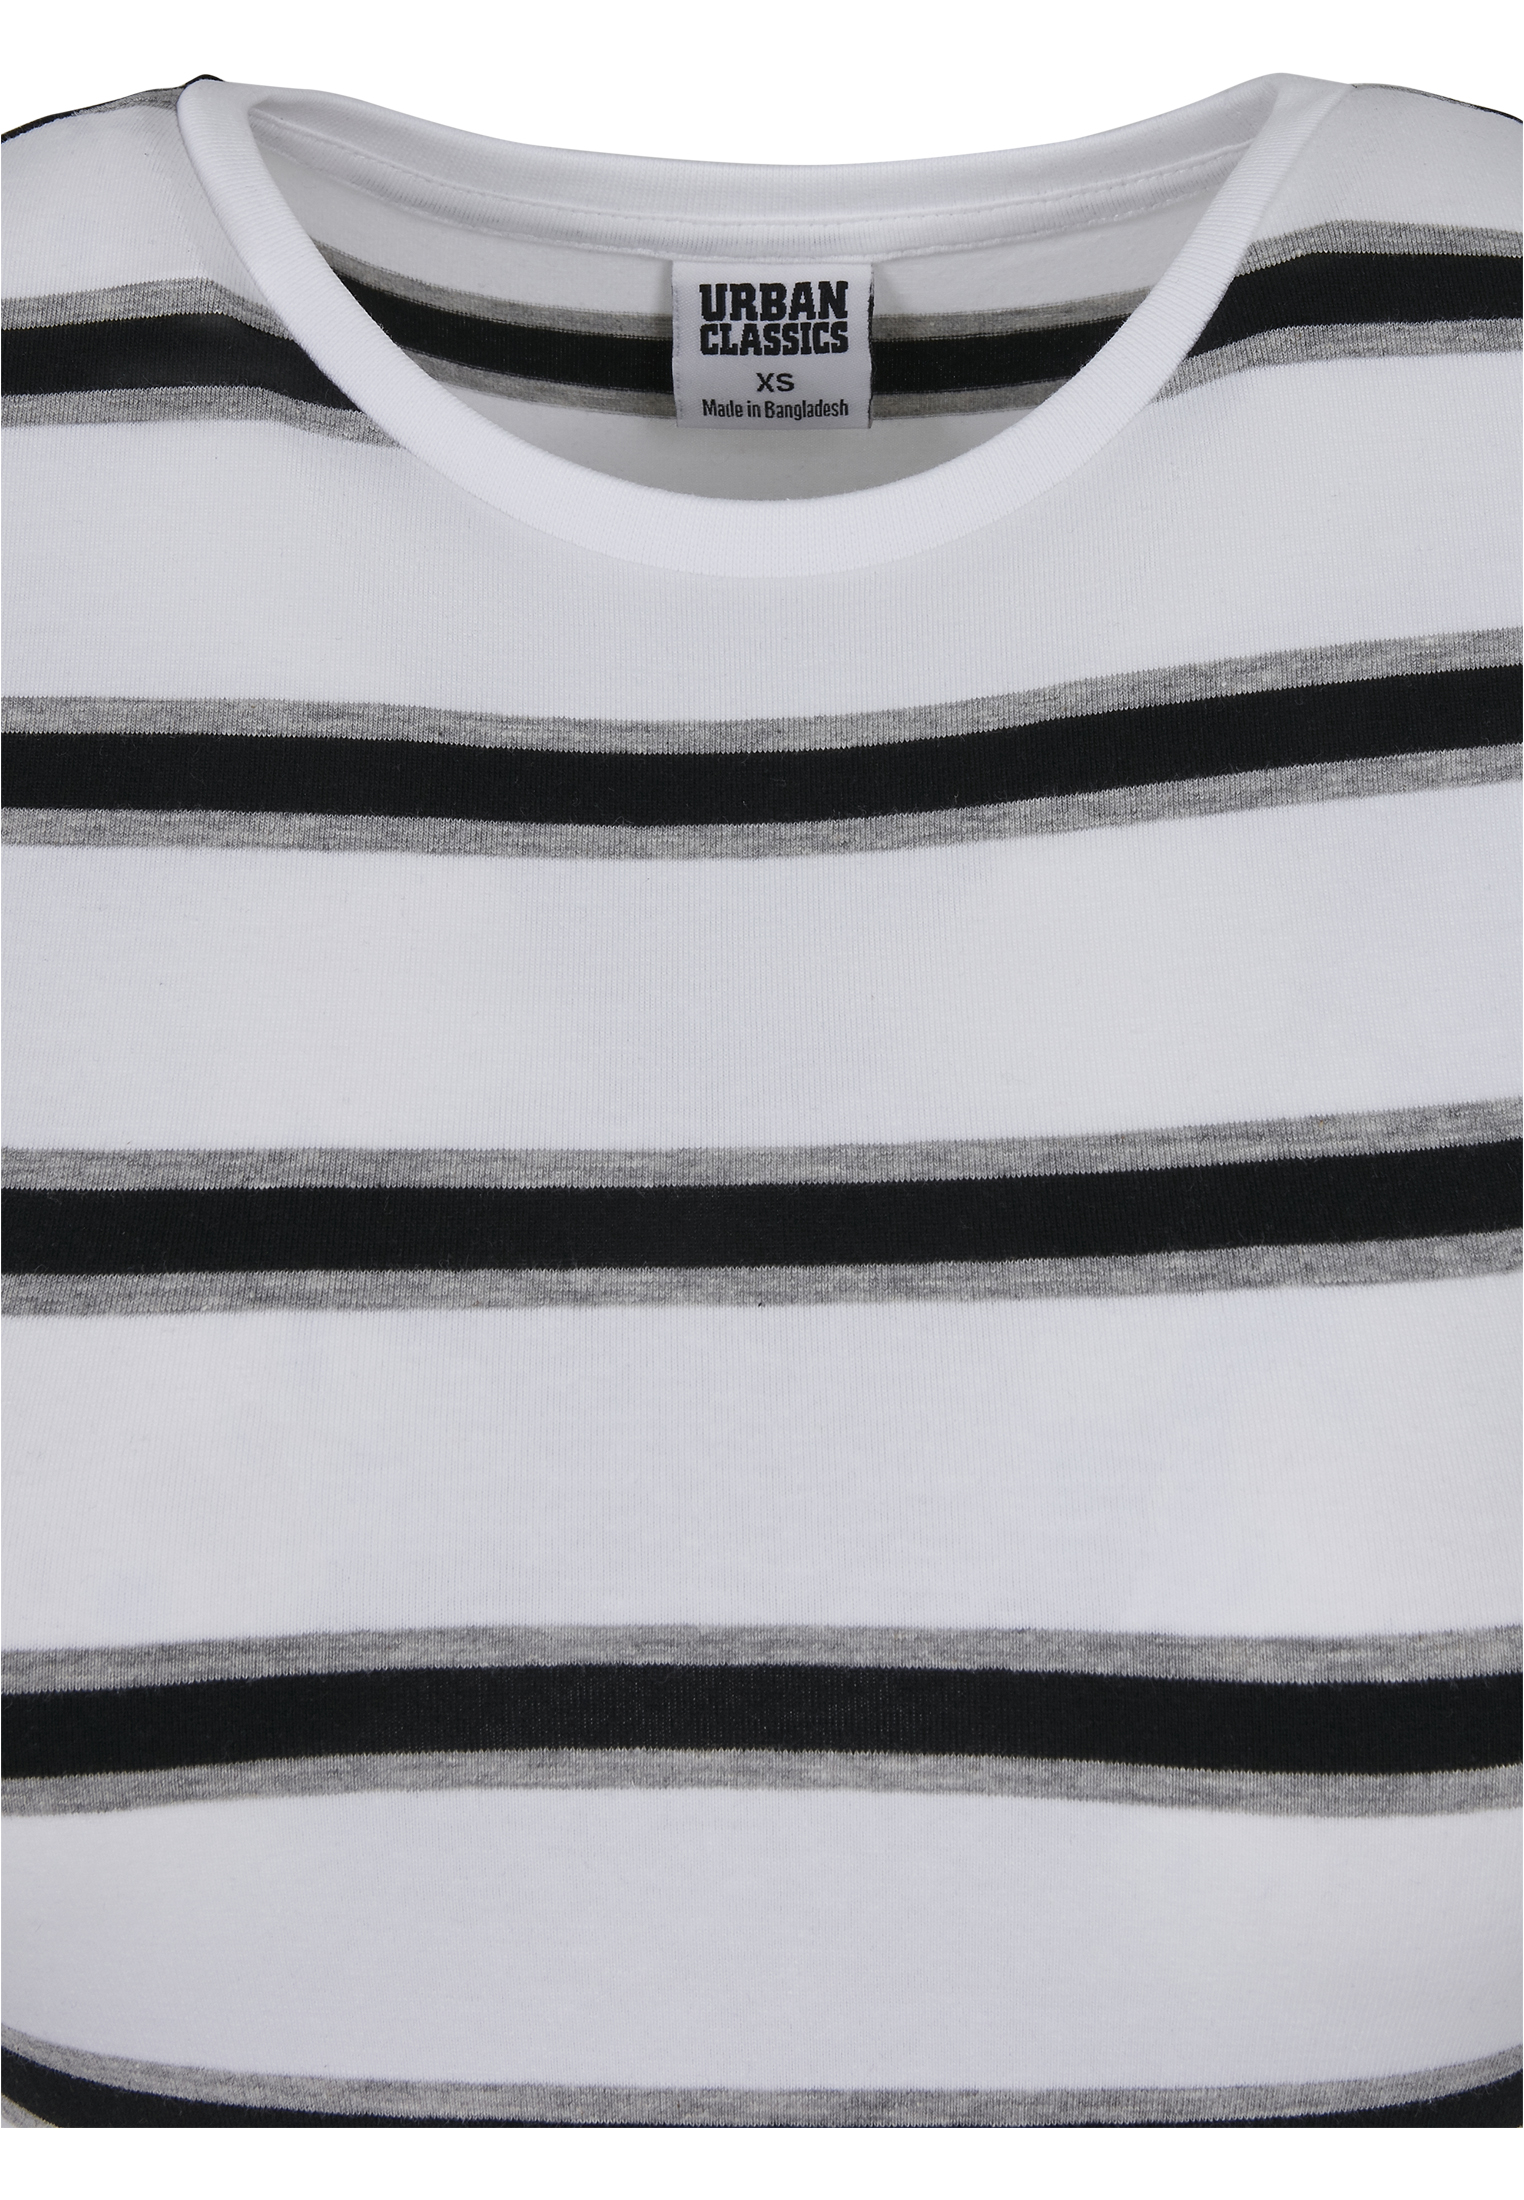 Kleider & R?cke Ladies Stretch Stripe Dress in Farbe white/black